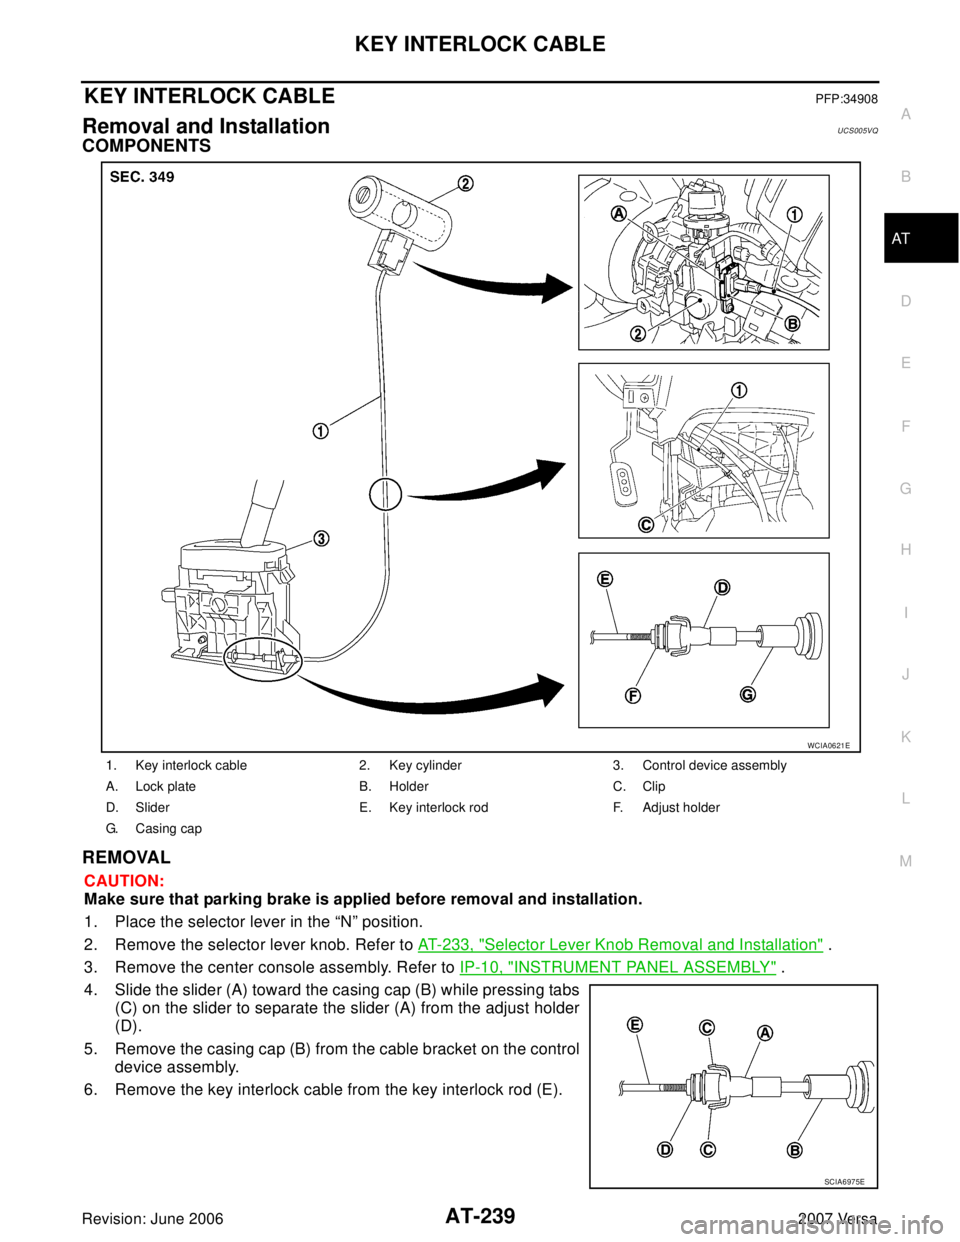 NISSAN TIIDA 2007  Service Repair Manual KEY INTERLOCK CABLE
AT-239
D
E
F
G
H
I
J
K
L
MA
B
AT
Revision: June 20062007 Versa
KEY INTERLOCK CABLEPFP:34908
Removal and InstallationUCS005VQ
COMPONENTS
REMOVAL
CAUTION:
Make sure that parking brak